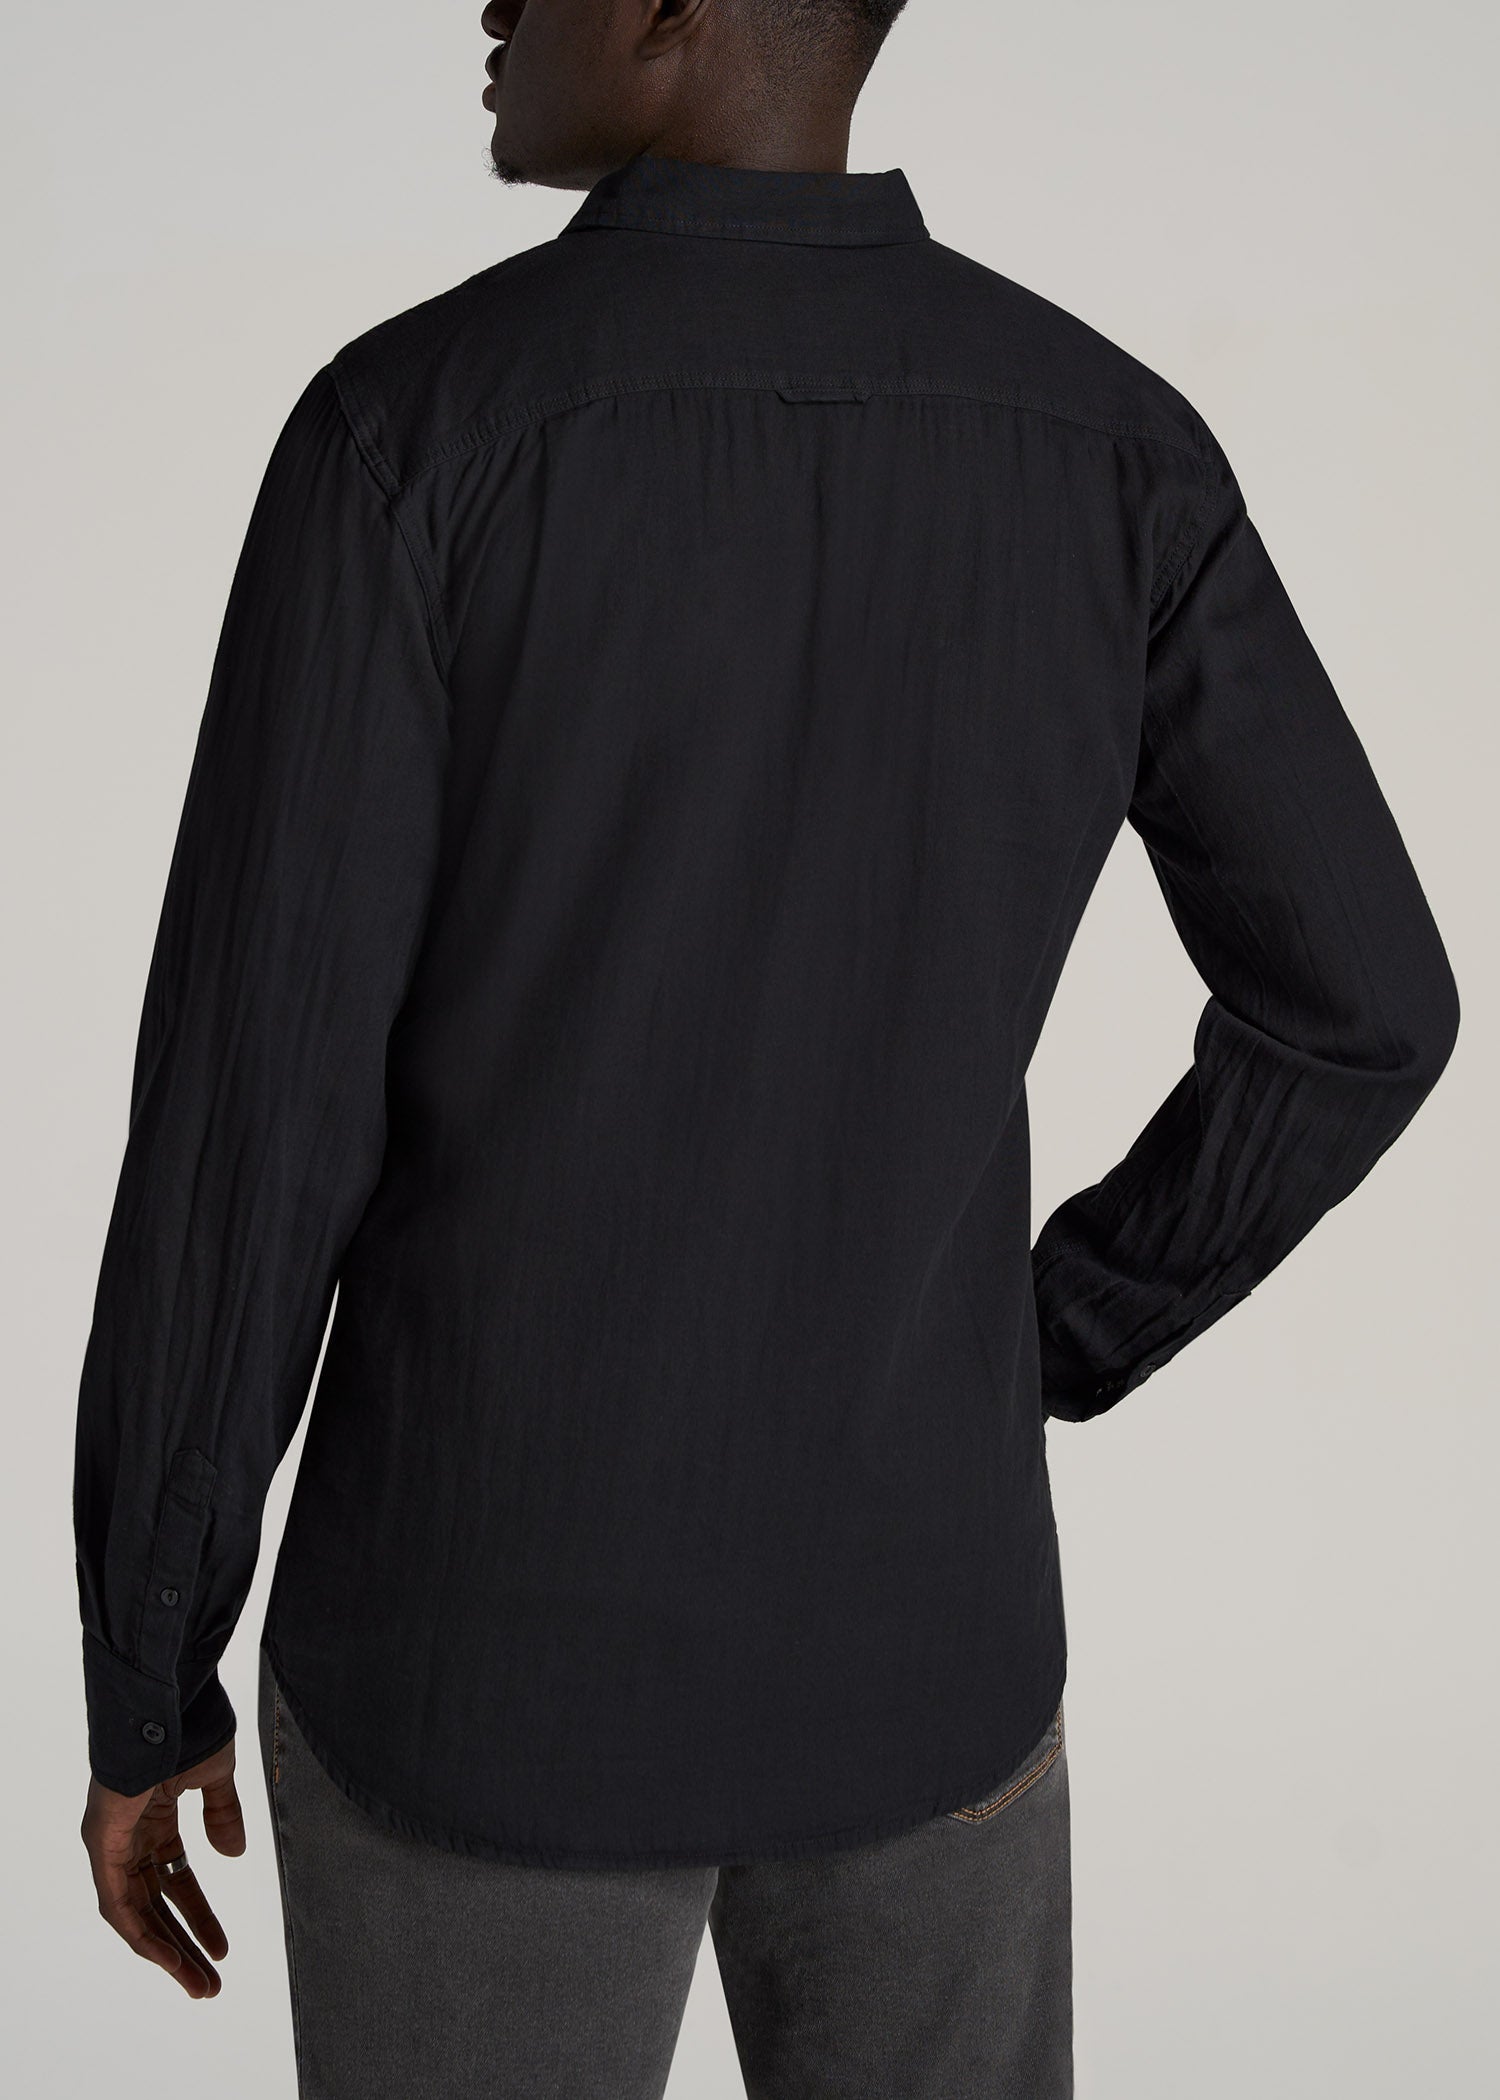 LJ&S Men's Tall Double Weave Shirt Vintage Black | American Tall